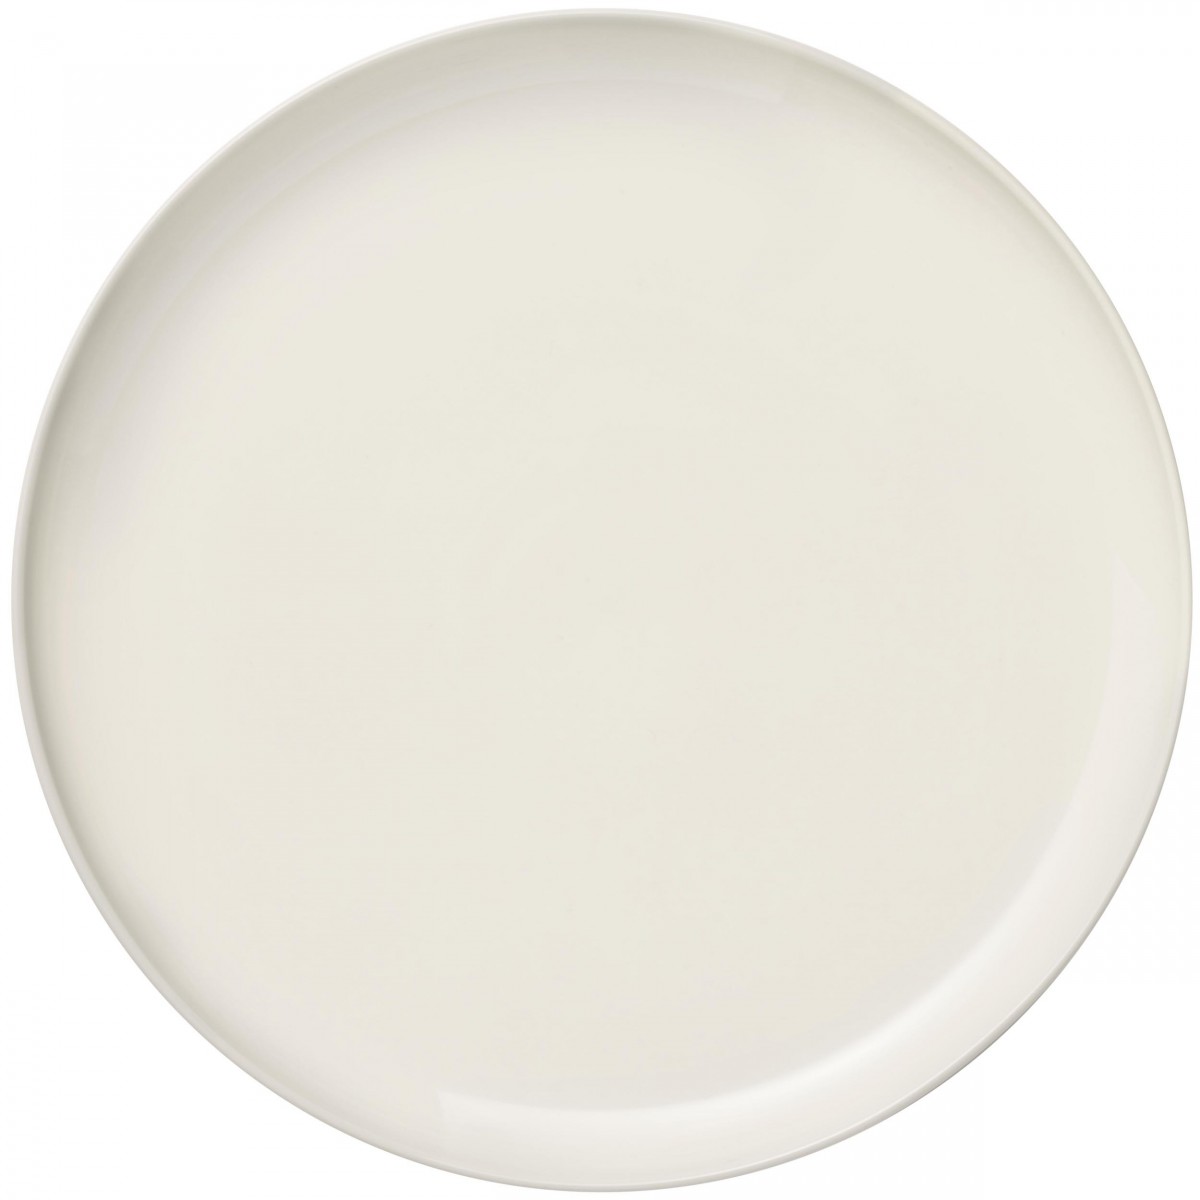 27cm - white plate Essence